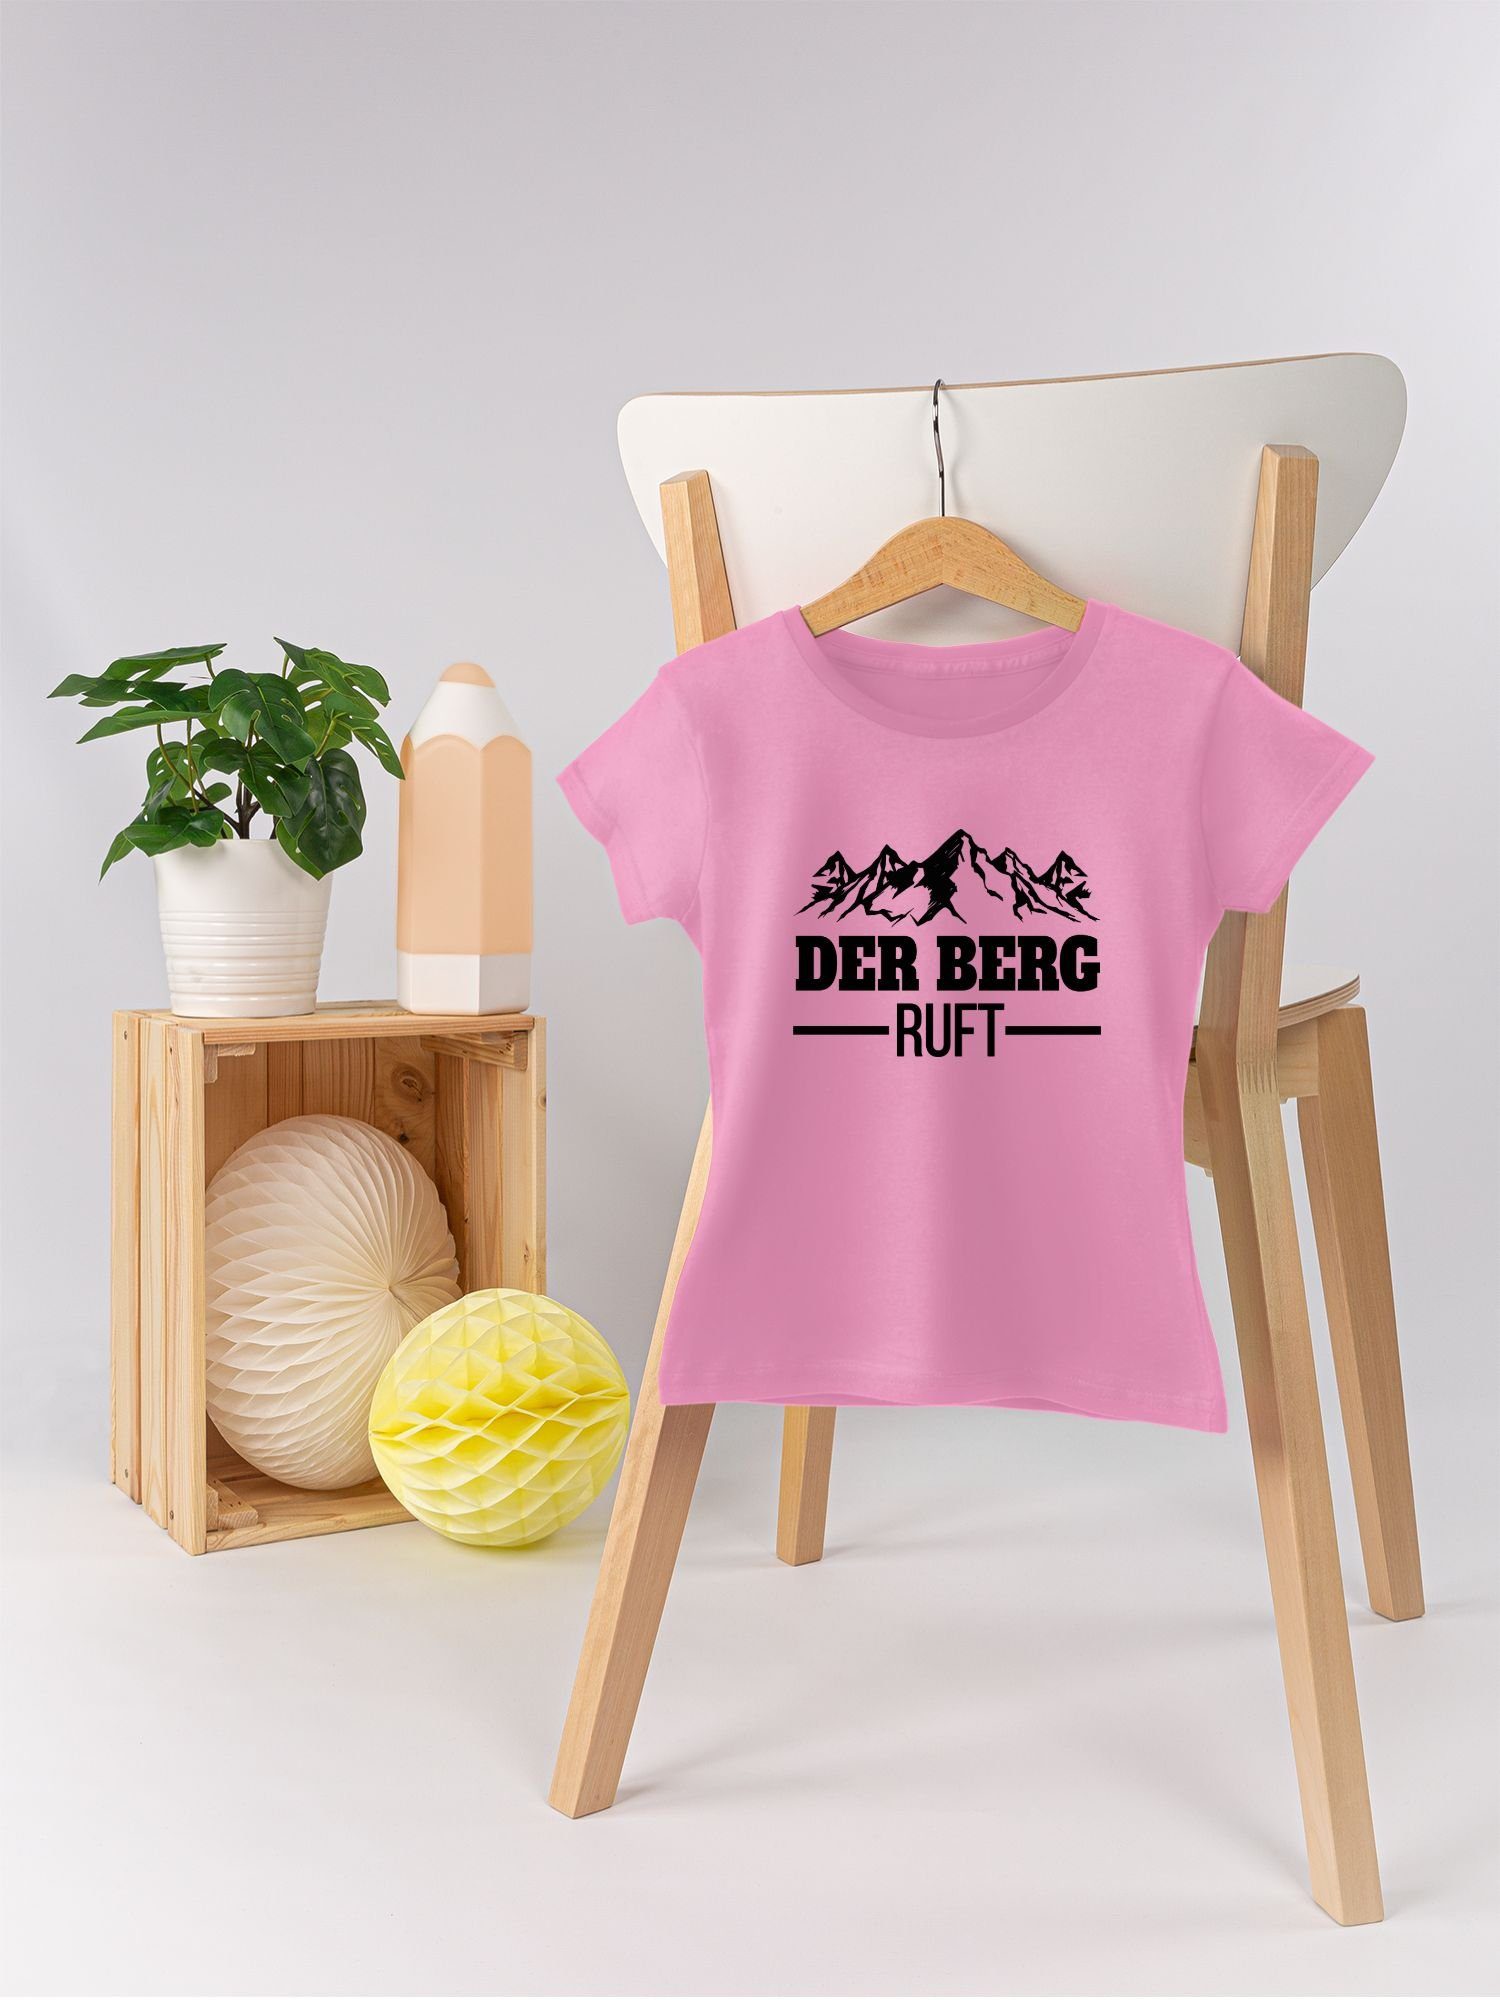 Shirtracer T-Shirt schwarz Kinder ruft Rosa - 2 Kleidung Sport Berg Der